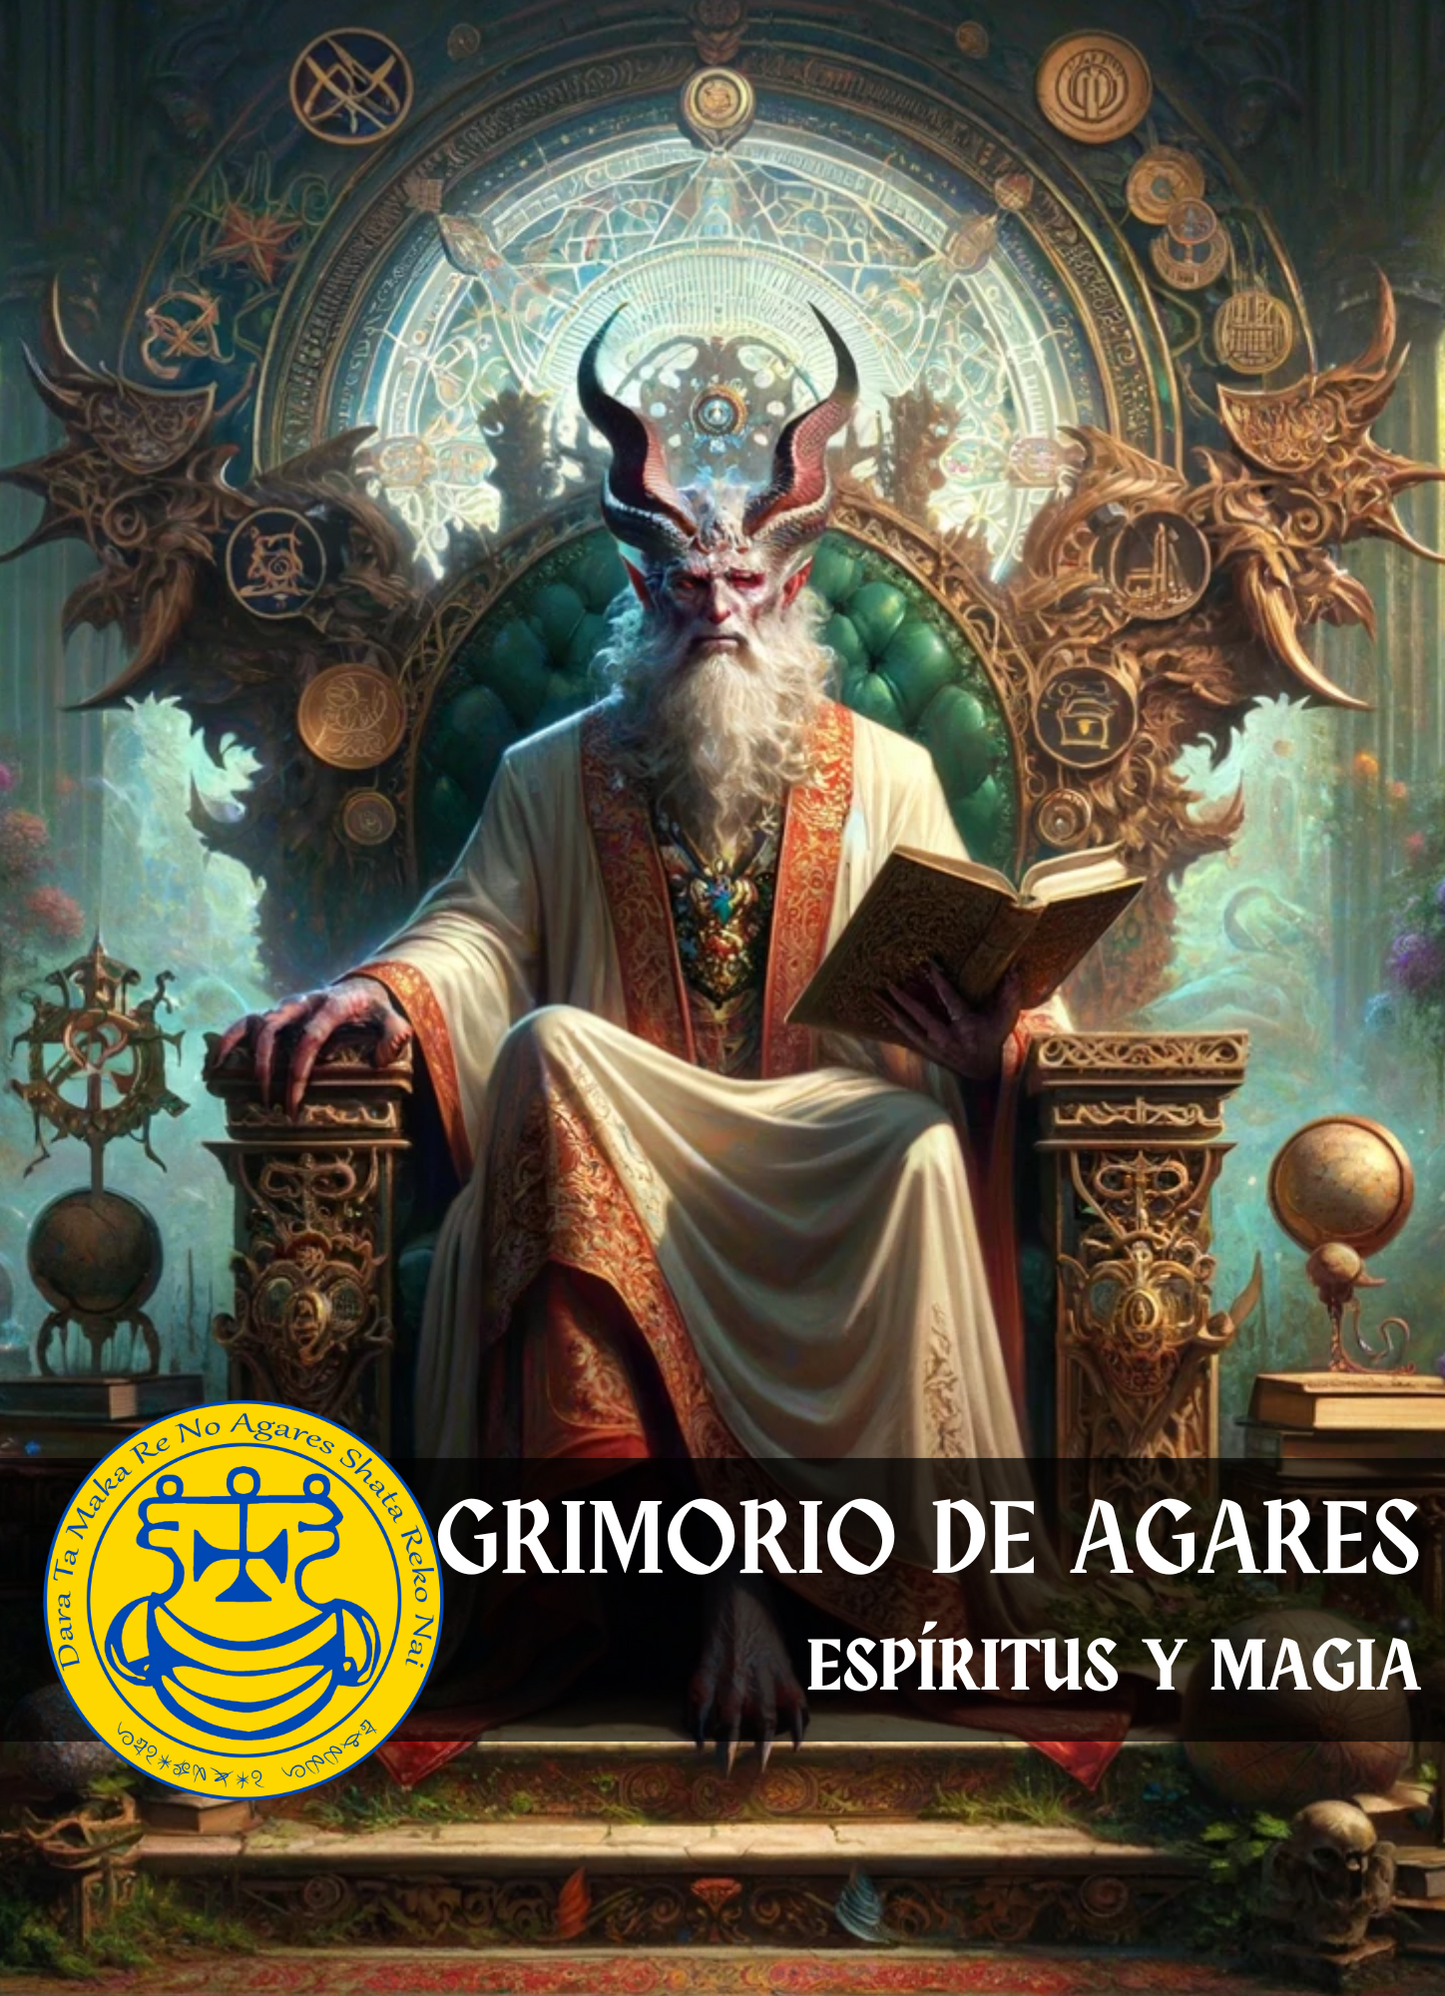 Grimoire of Agares Mantera & Ritual untuk Persahabatan dan Hubungan Sosial untuk Memperkasakan Diri - Abraxas Amulets ® Magic ♾️ Talismans ♾️ Initiations